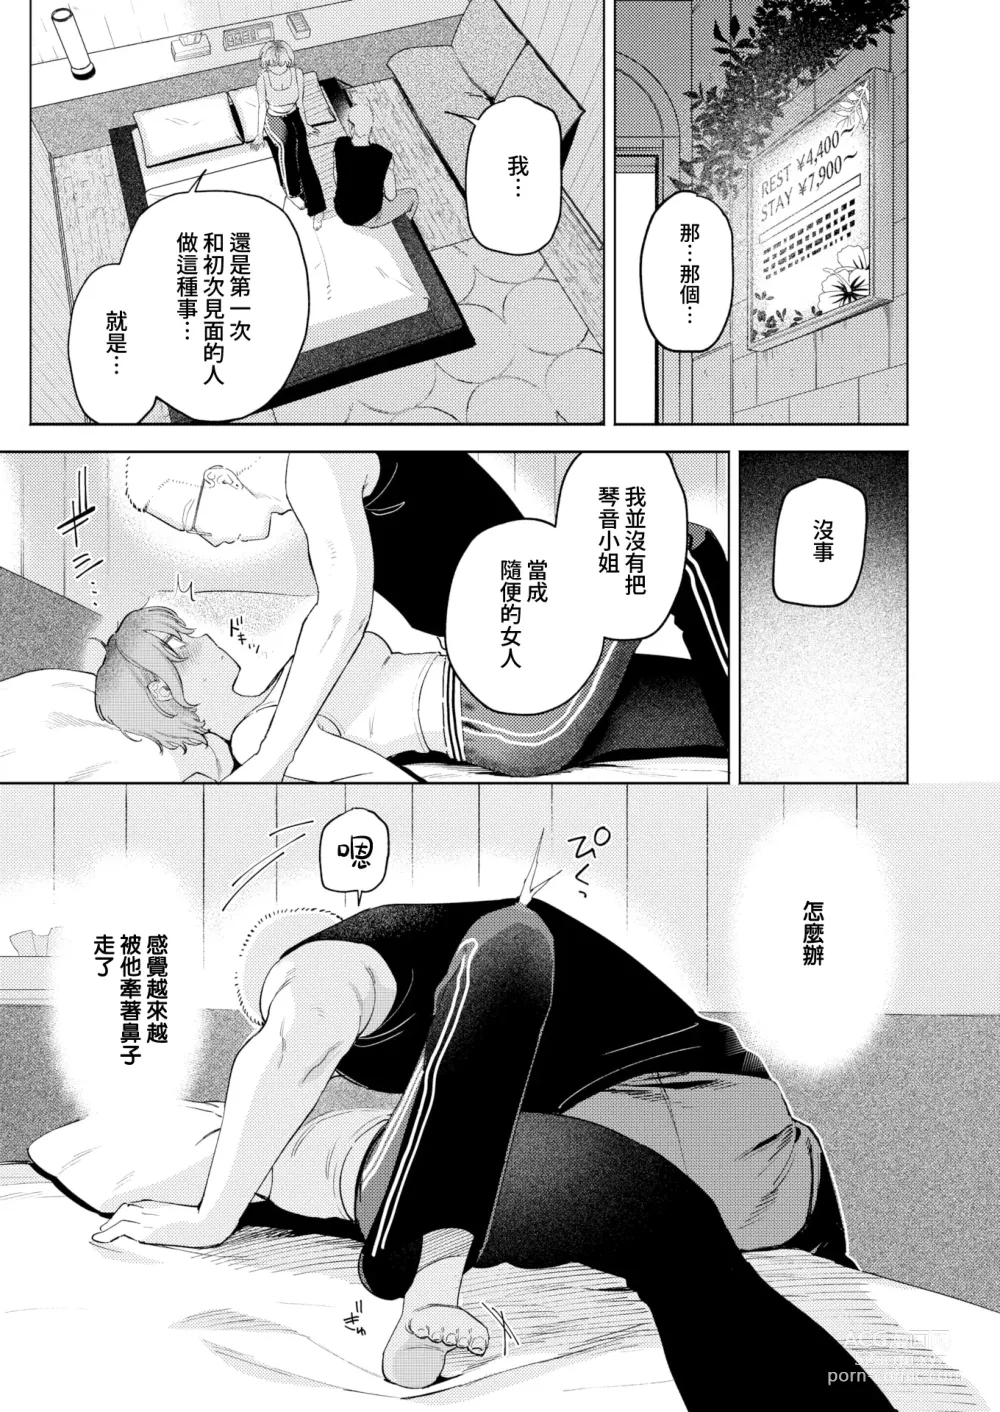 Page 13 of manga 搭錯紅線